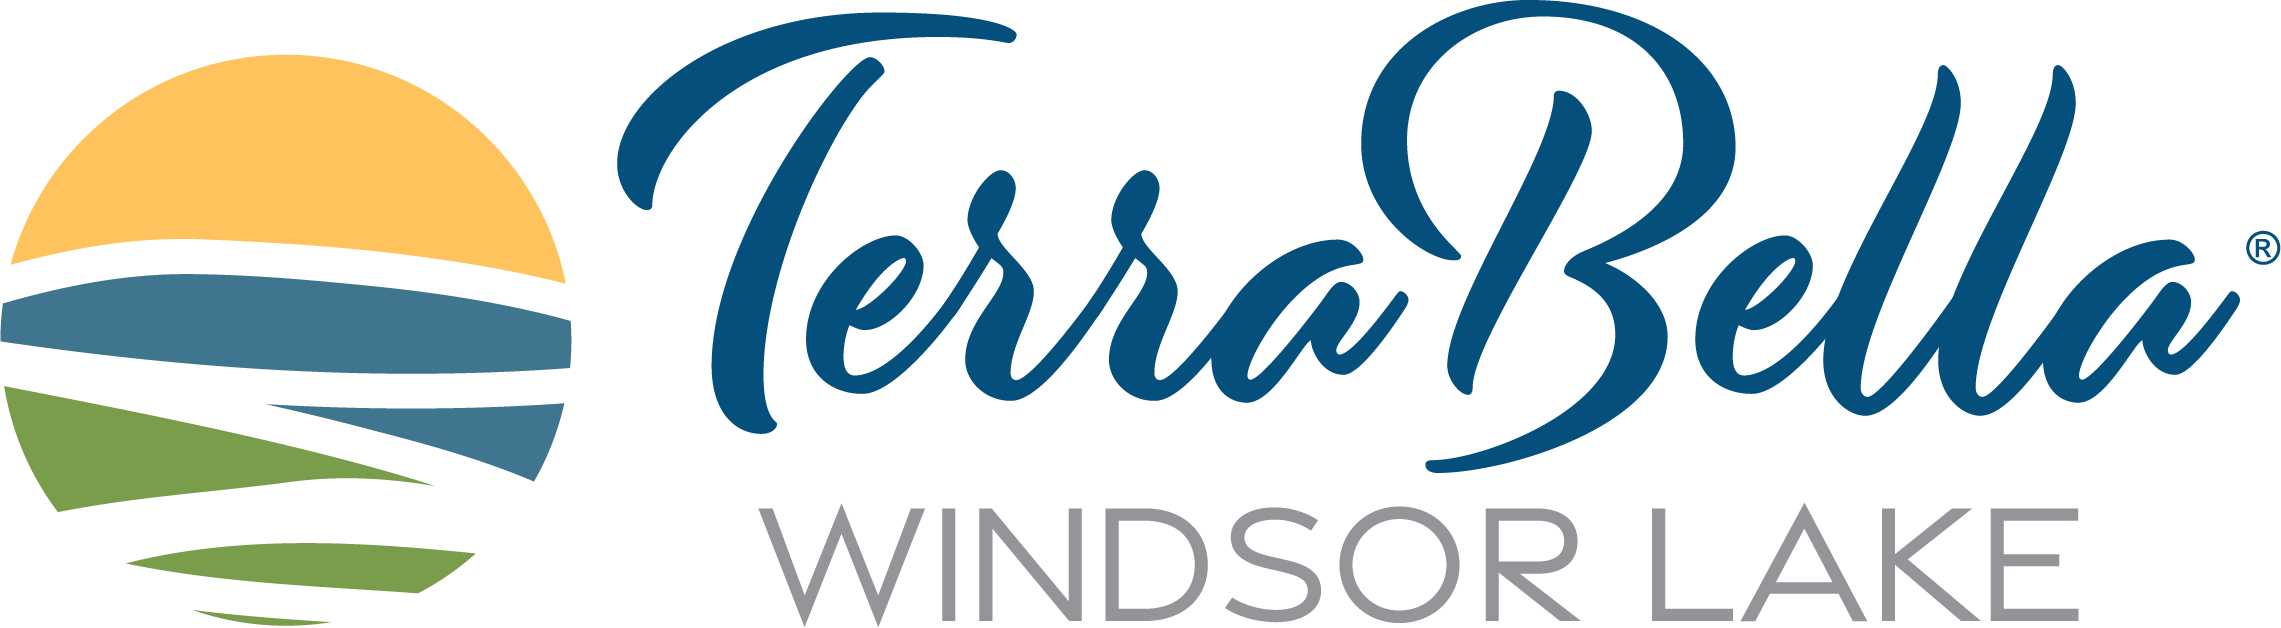 https://www.terrabellaseniorliving.com/wp-content/uploads/2021/05/TerraBella-Windsor-Lake_Horizontal_250.png